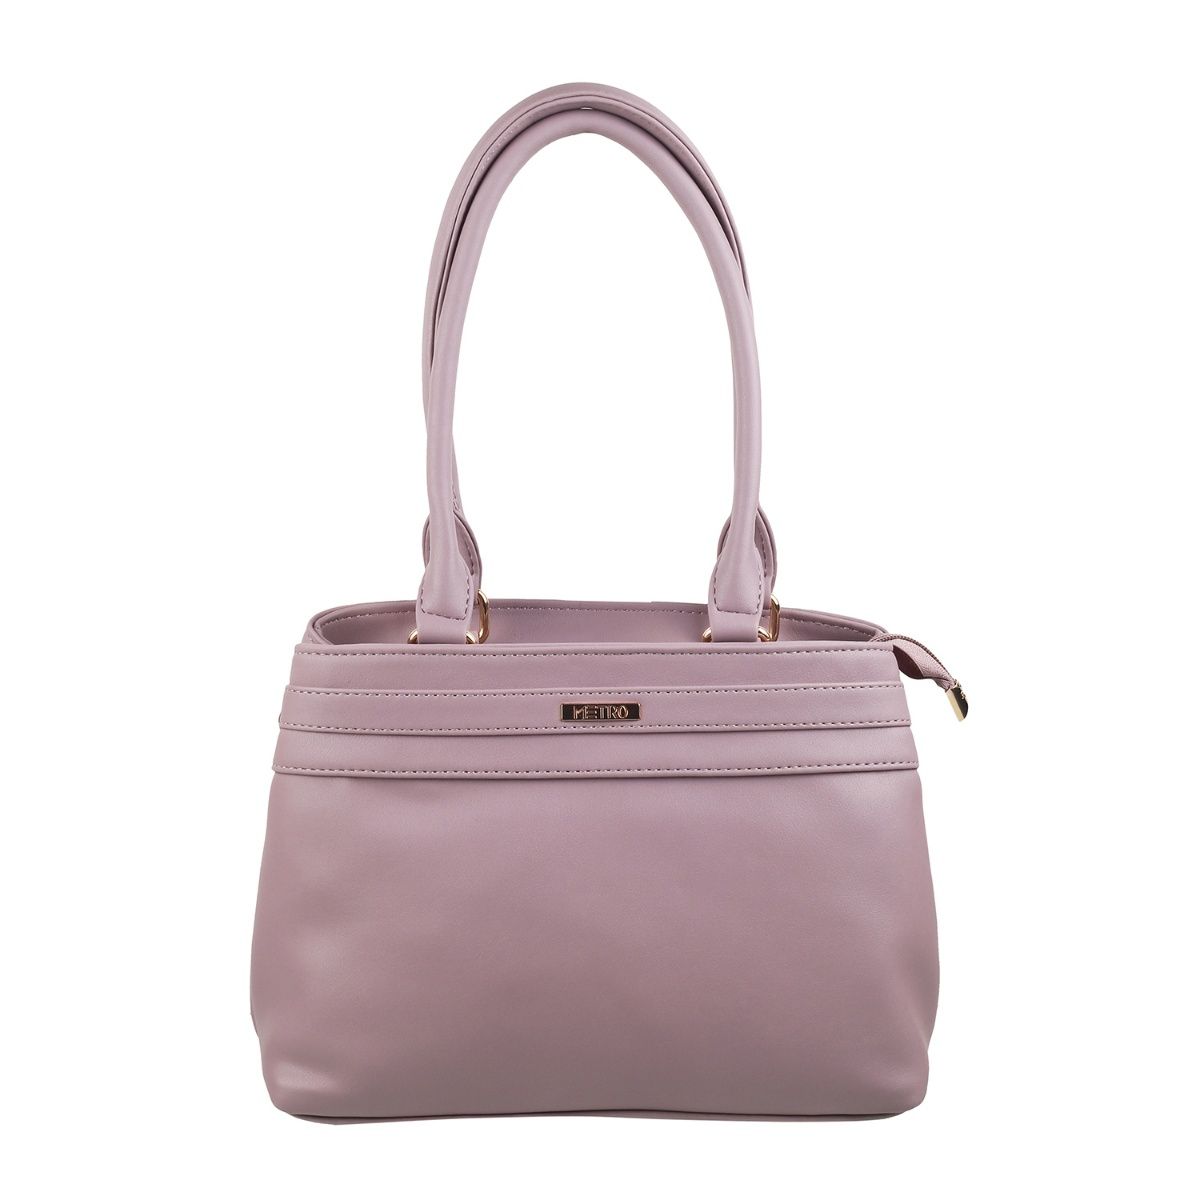 Buy Lapis O Lupo Women's Small Handbag (LLHB0078BL Blue) Online